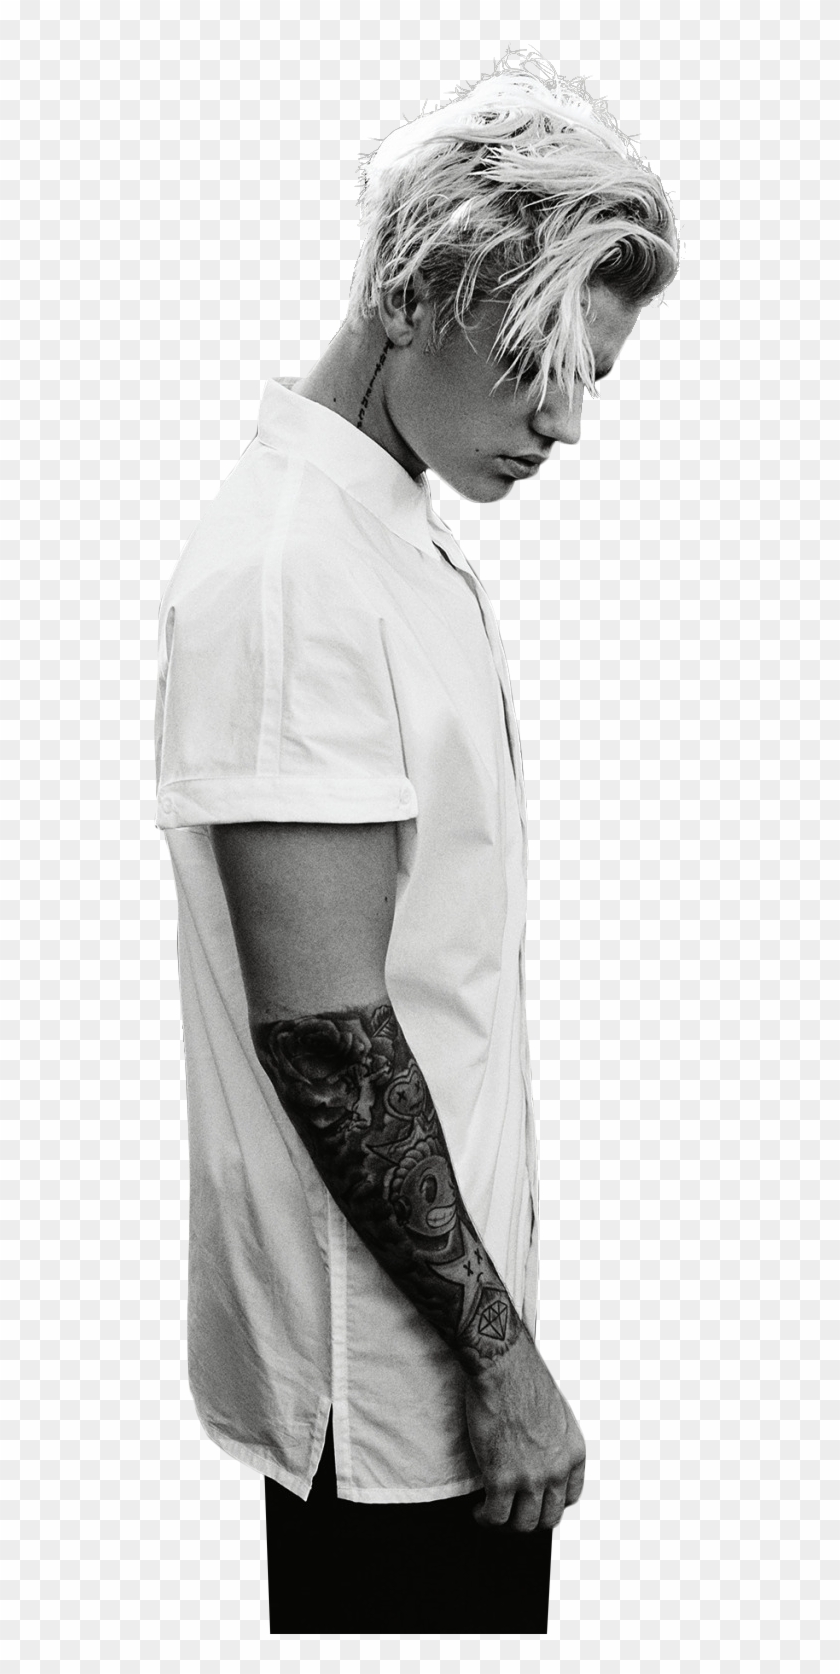 Justin Bieber Black And White Png Image - Justin Bieber Black And White Clipart #30675